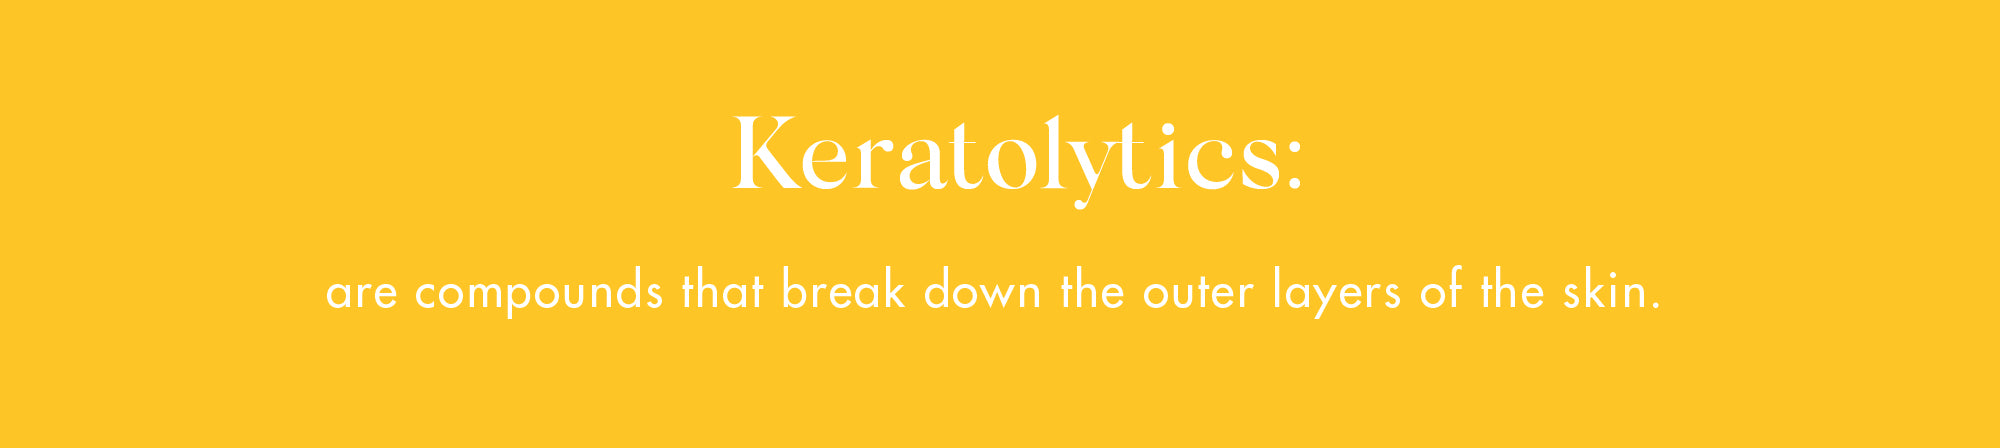 Keratolytics yellow banner